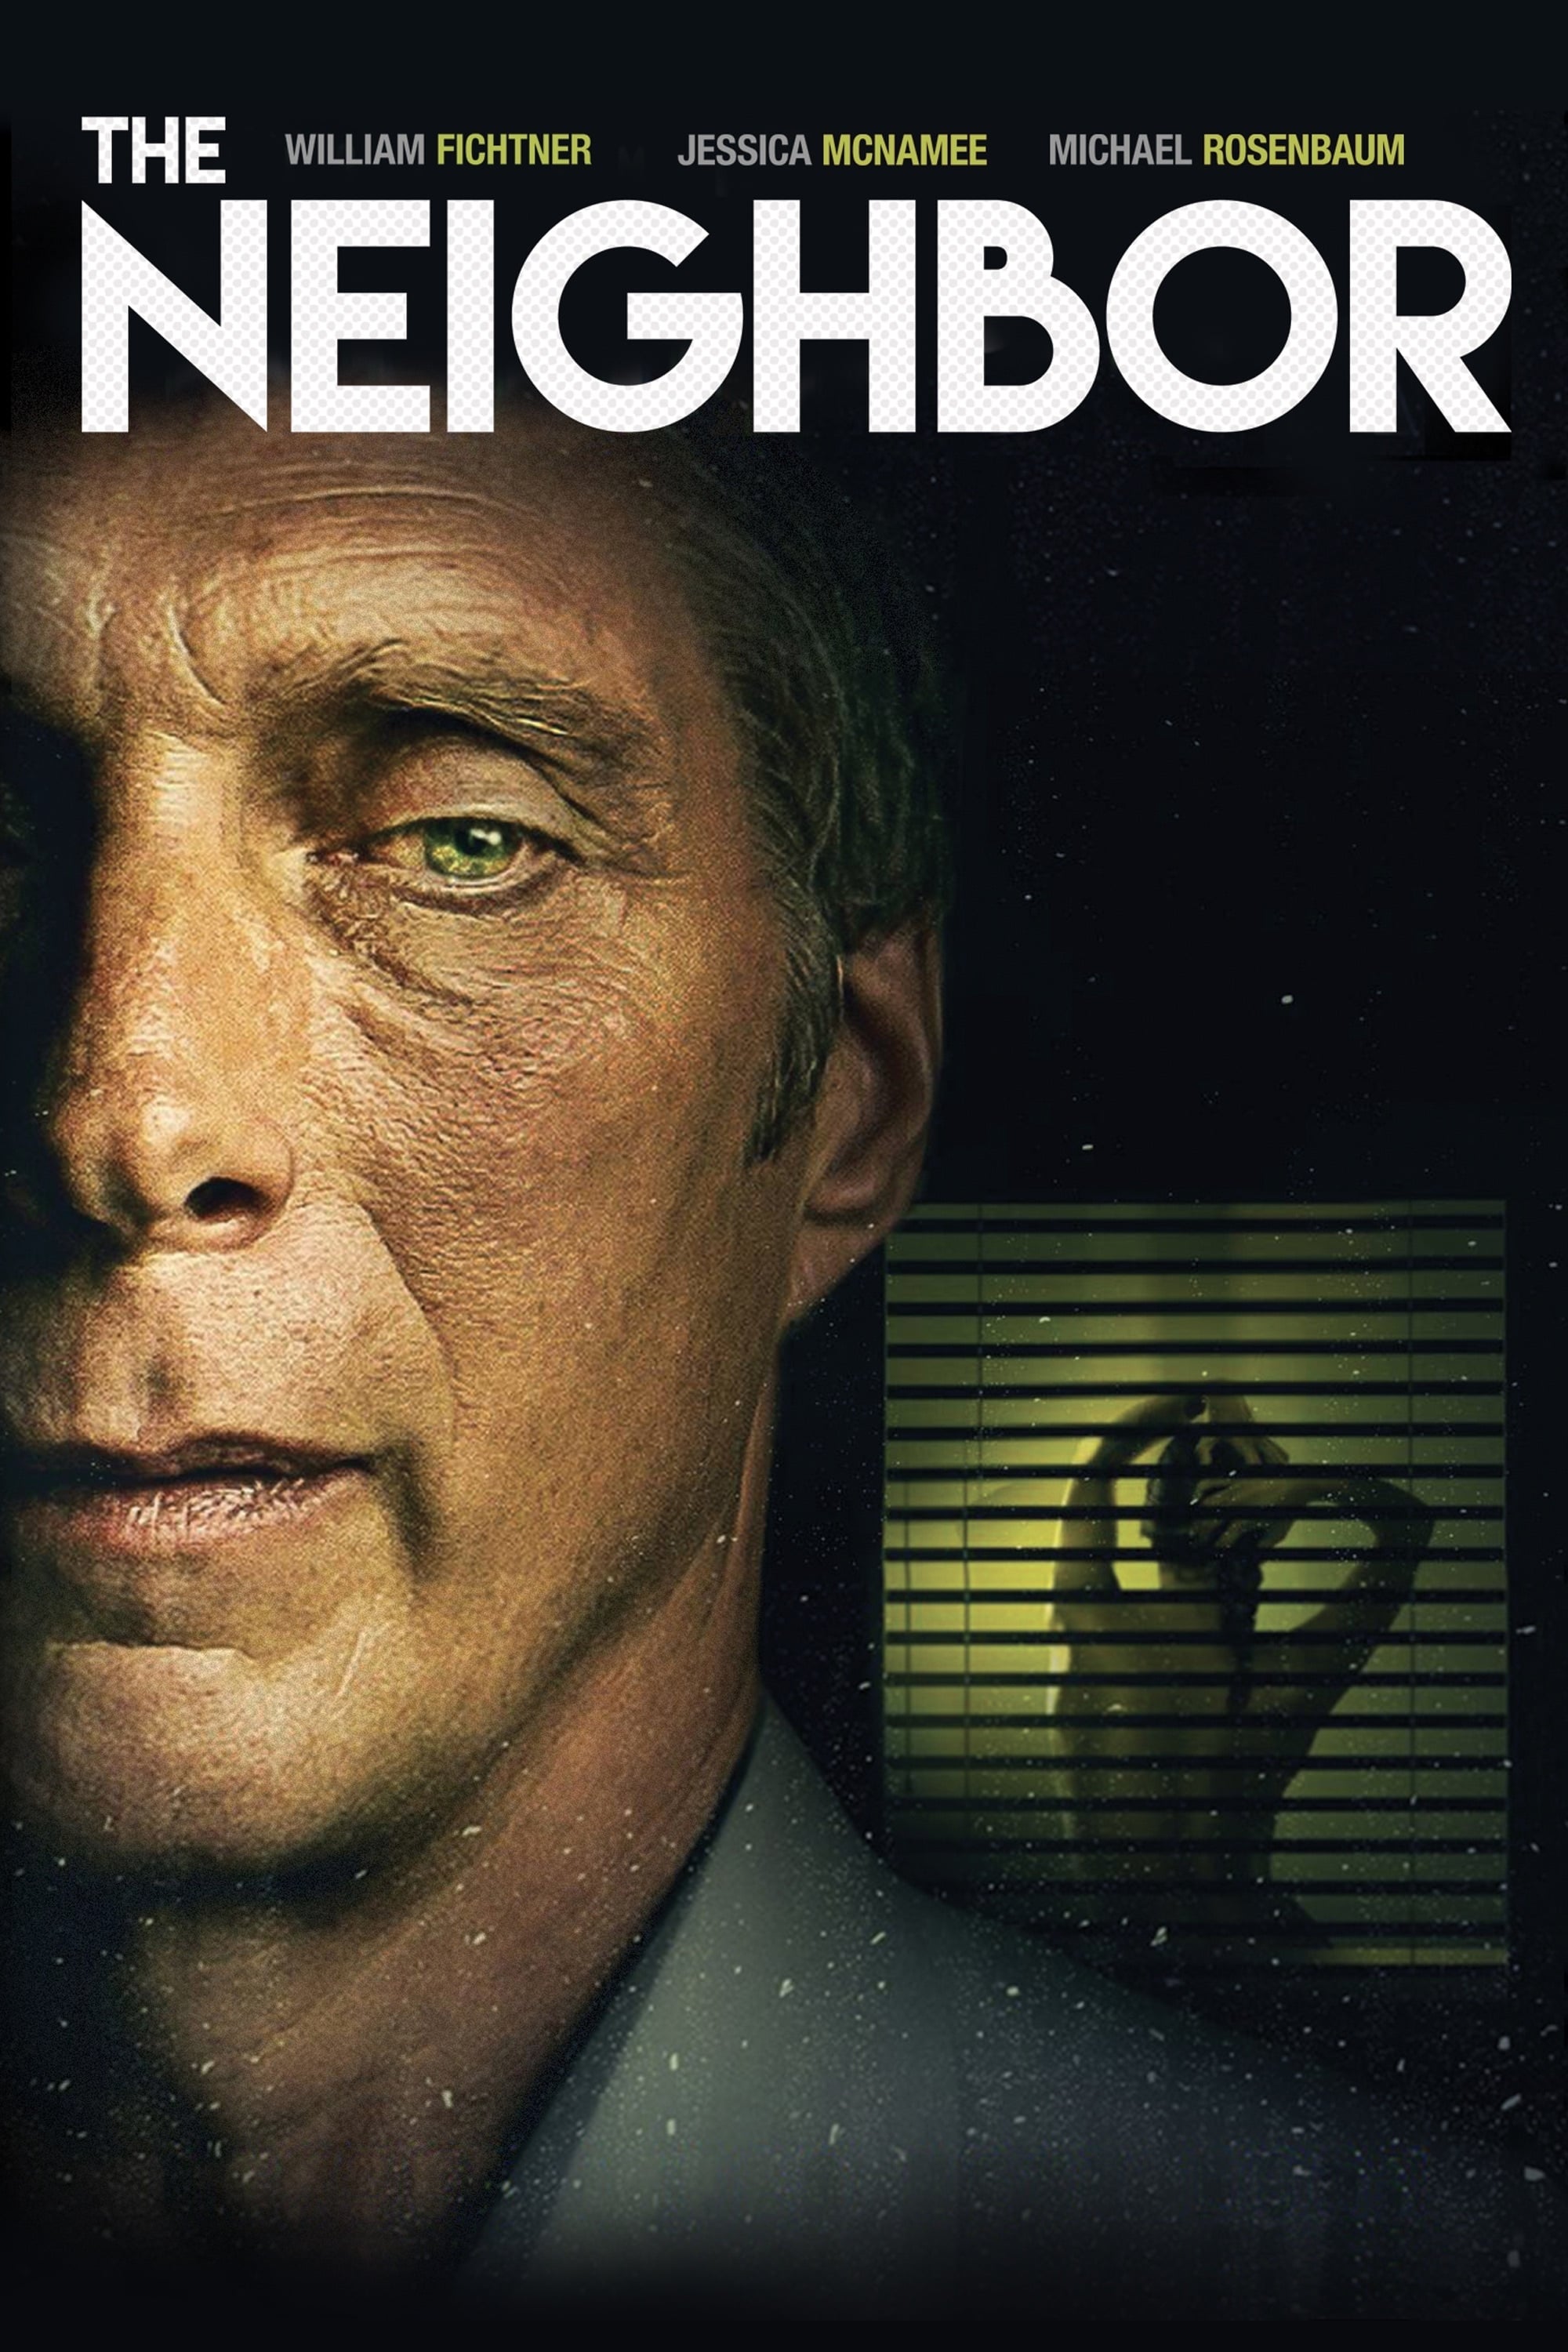 The Neighbor film